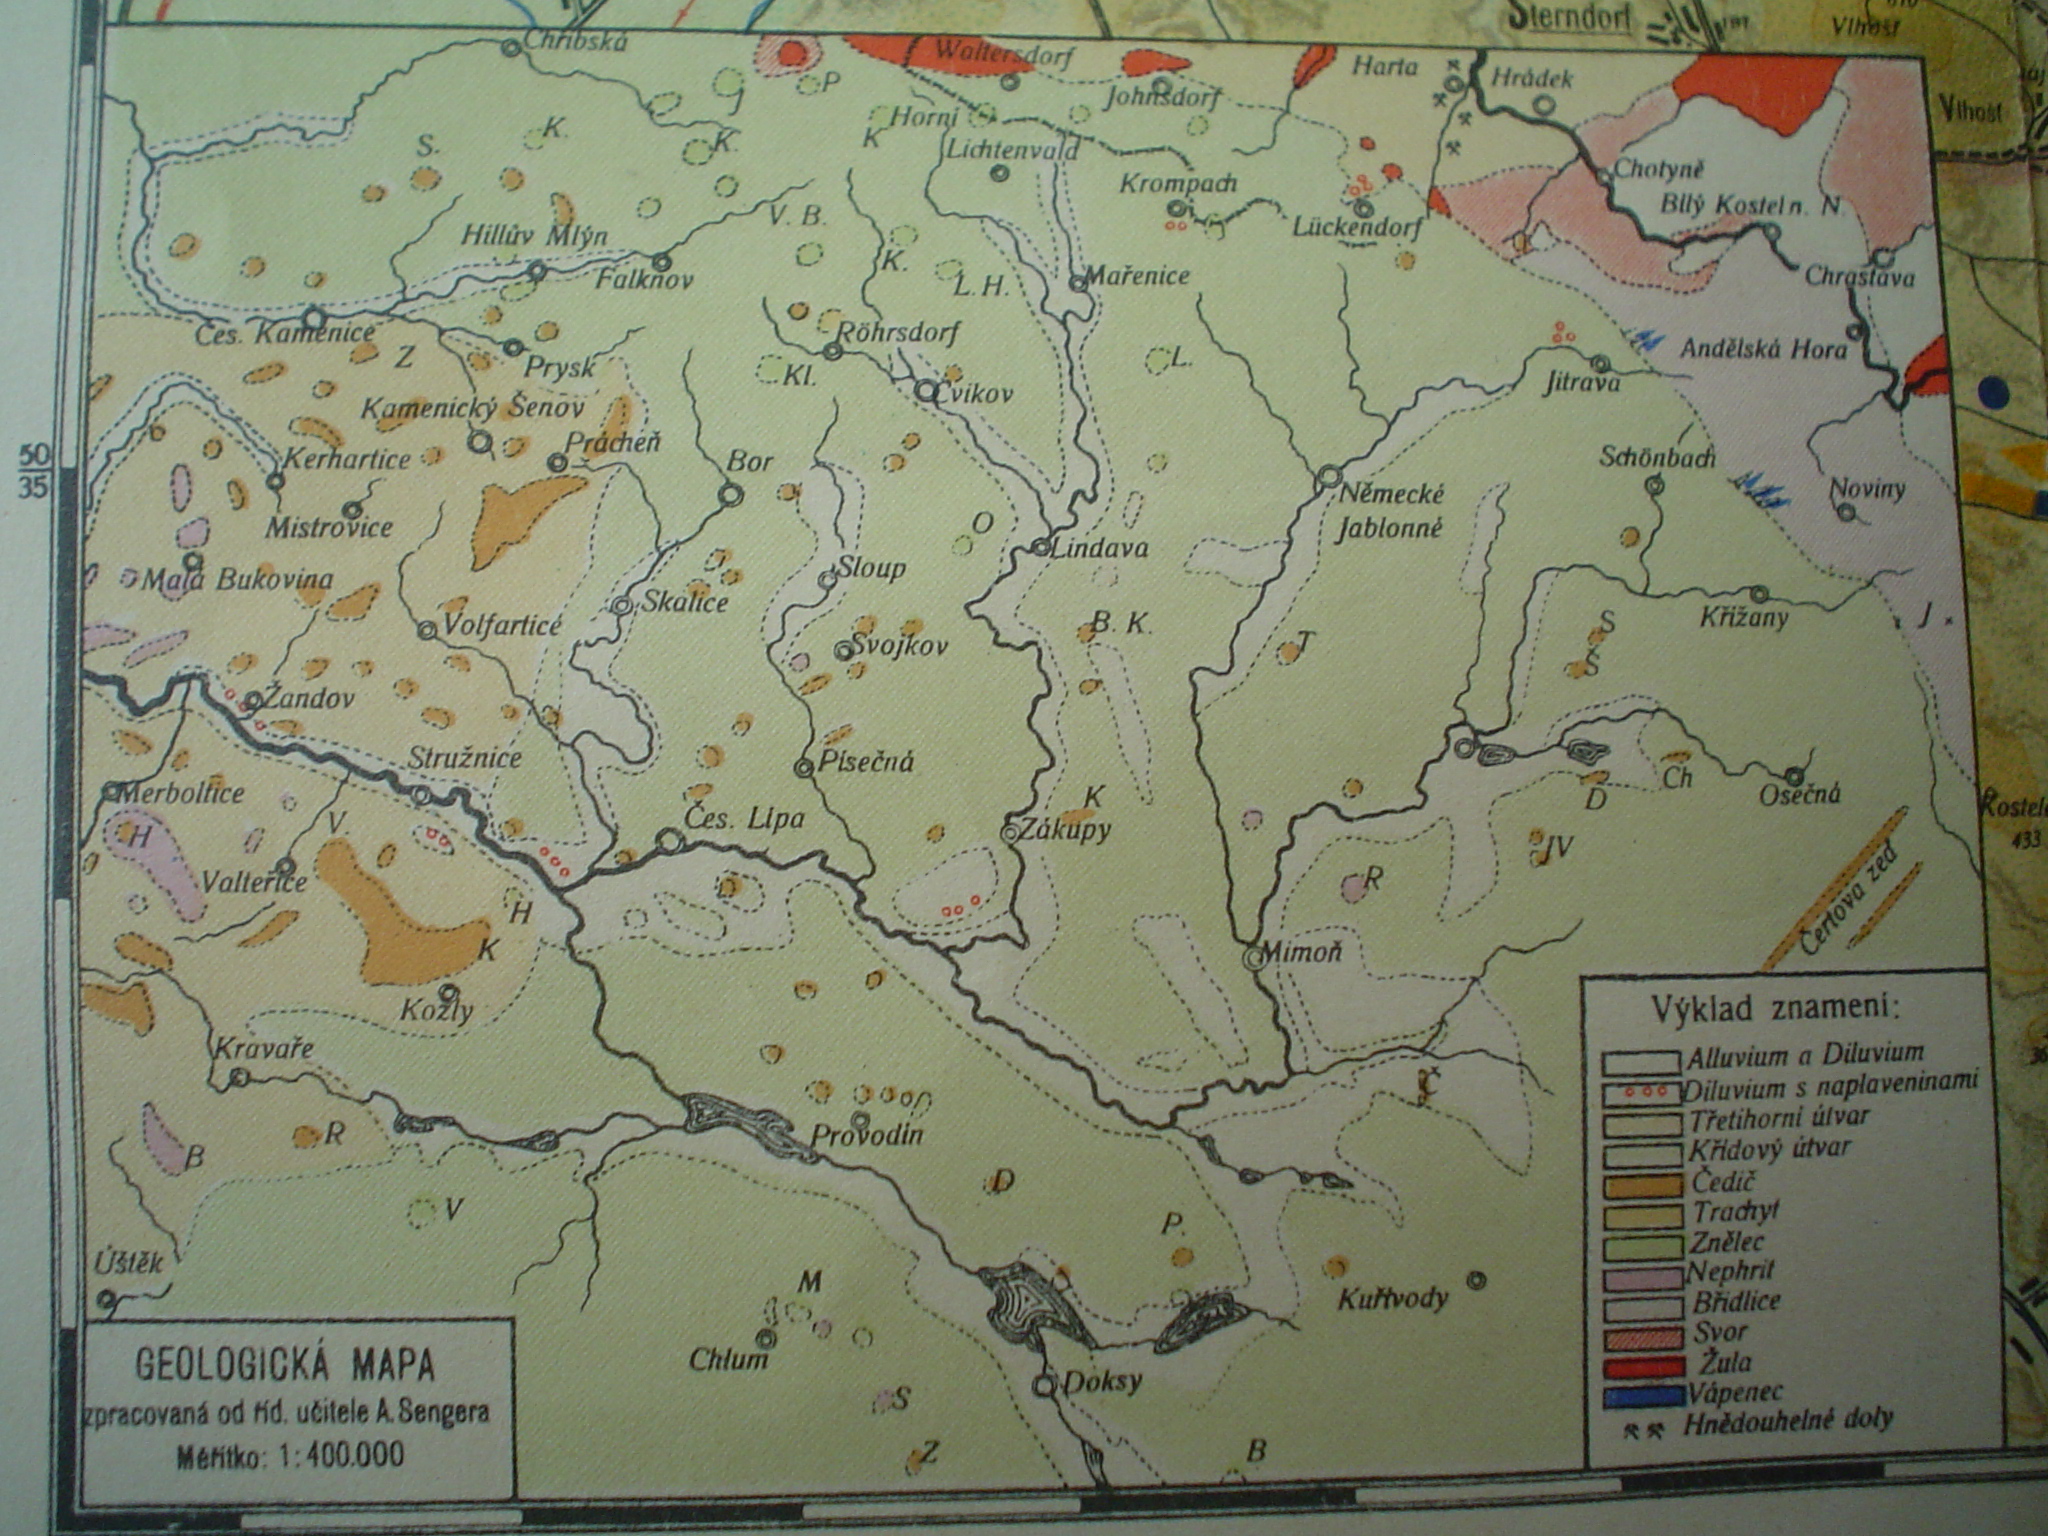 Geologická mapa.JPG